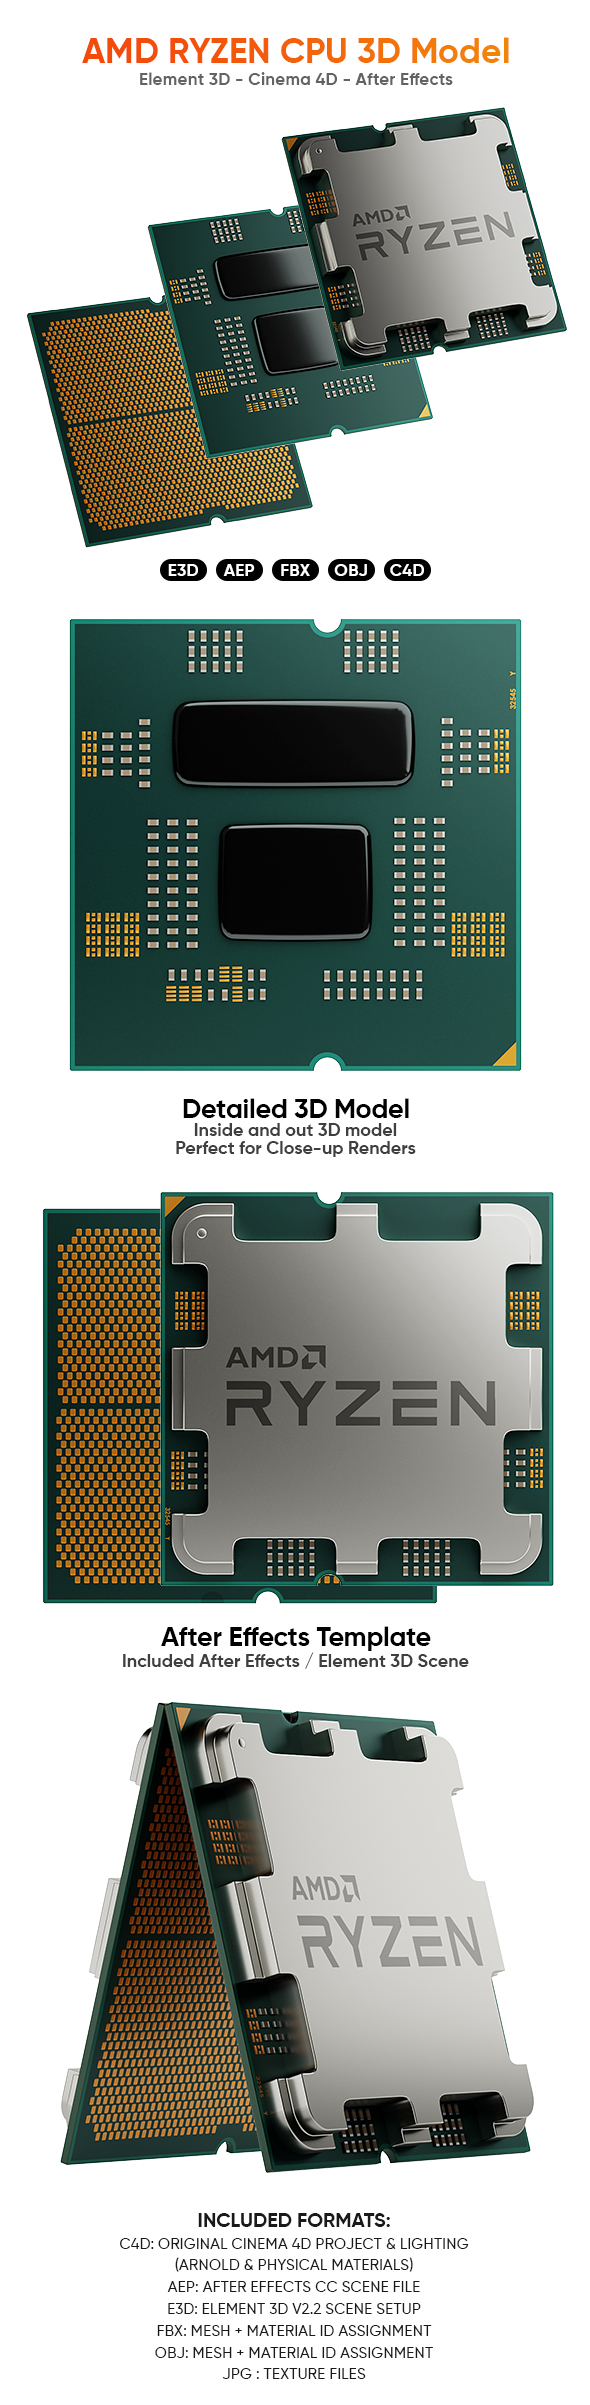 [DOWNLOAD]AMD RYZEN 9 CPU Detailed 3D Model for Element 3D & Cinema 4D